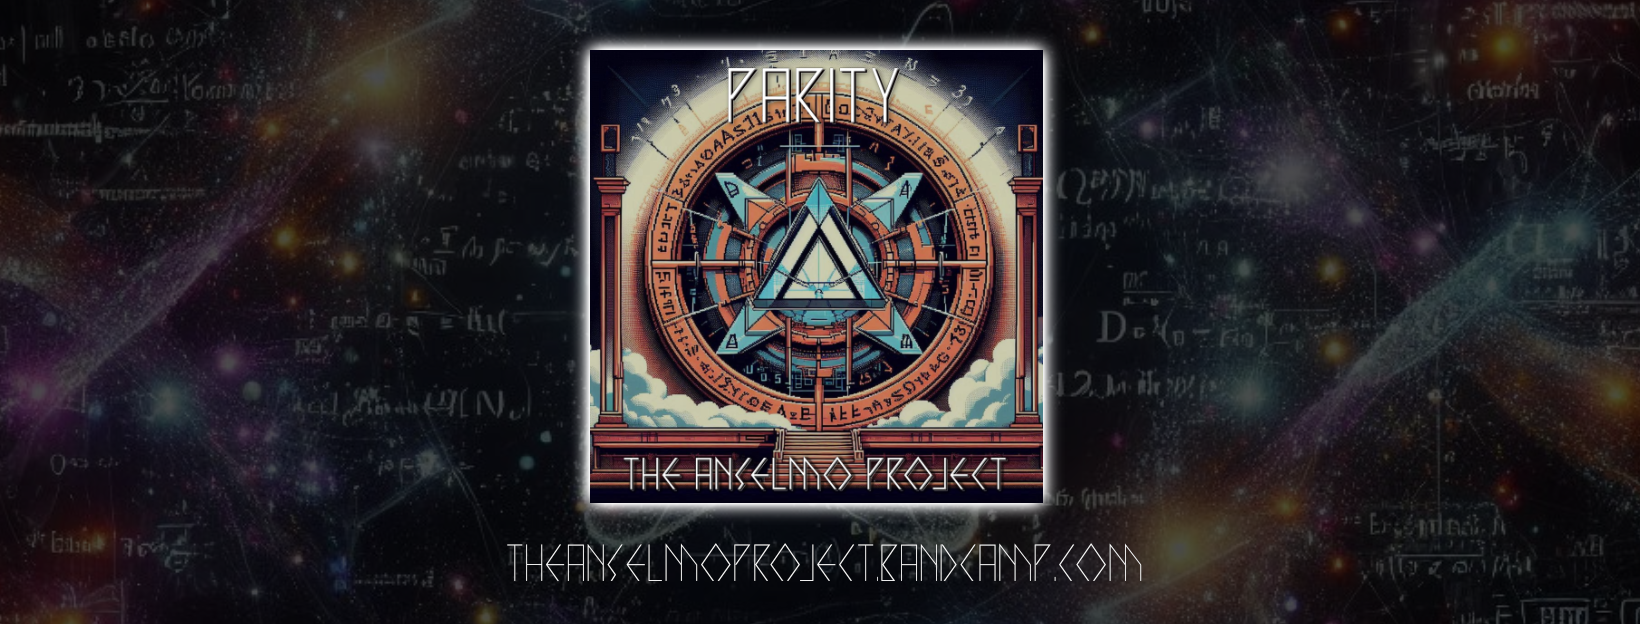 The Anselmo Project - Parity - Progressive Rock Single